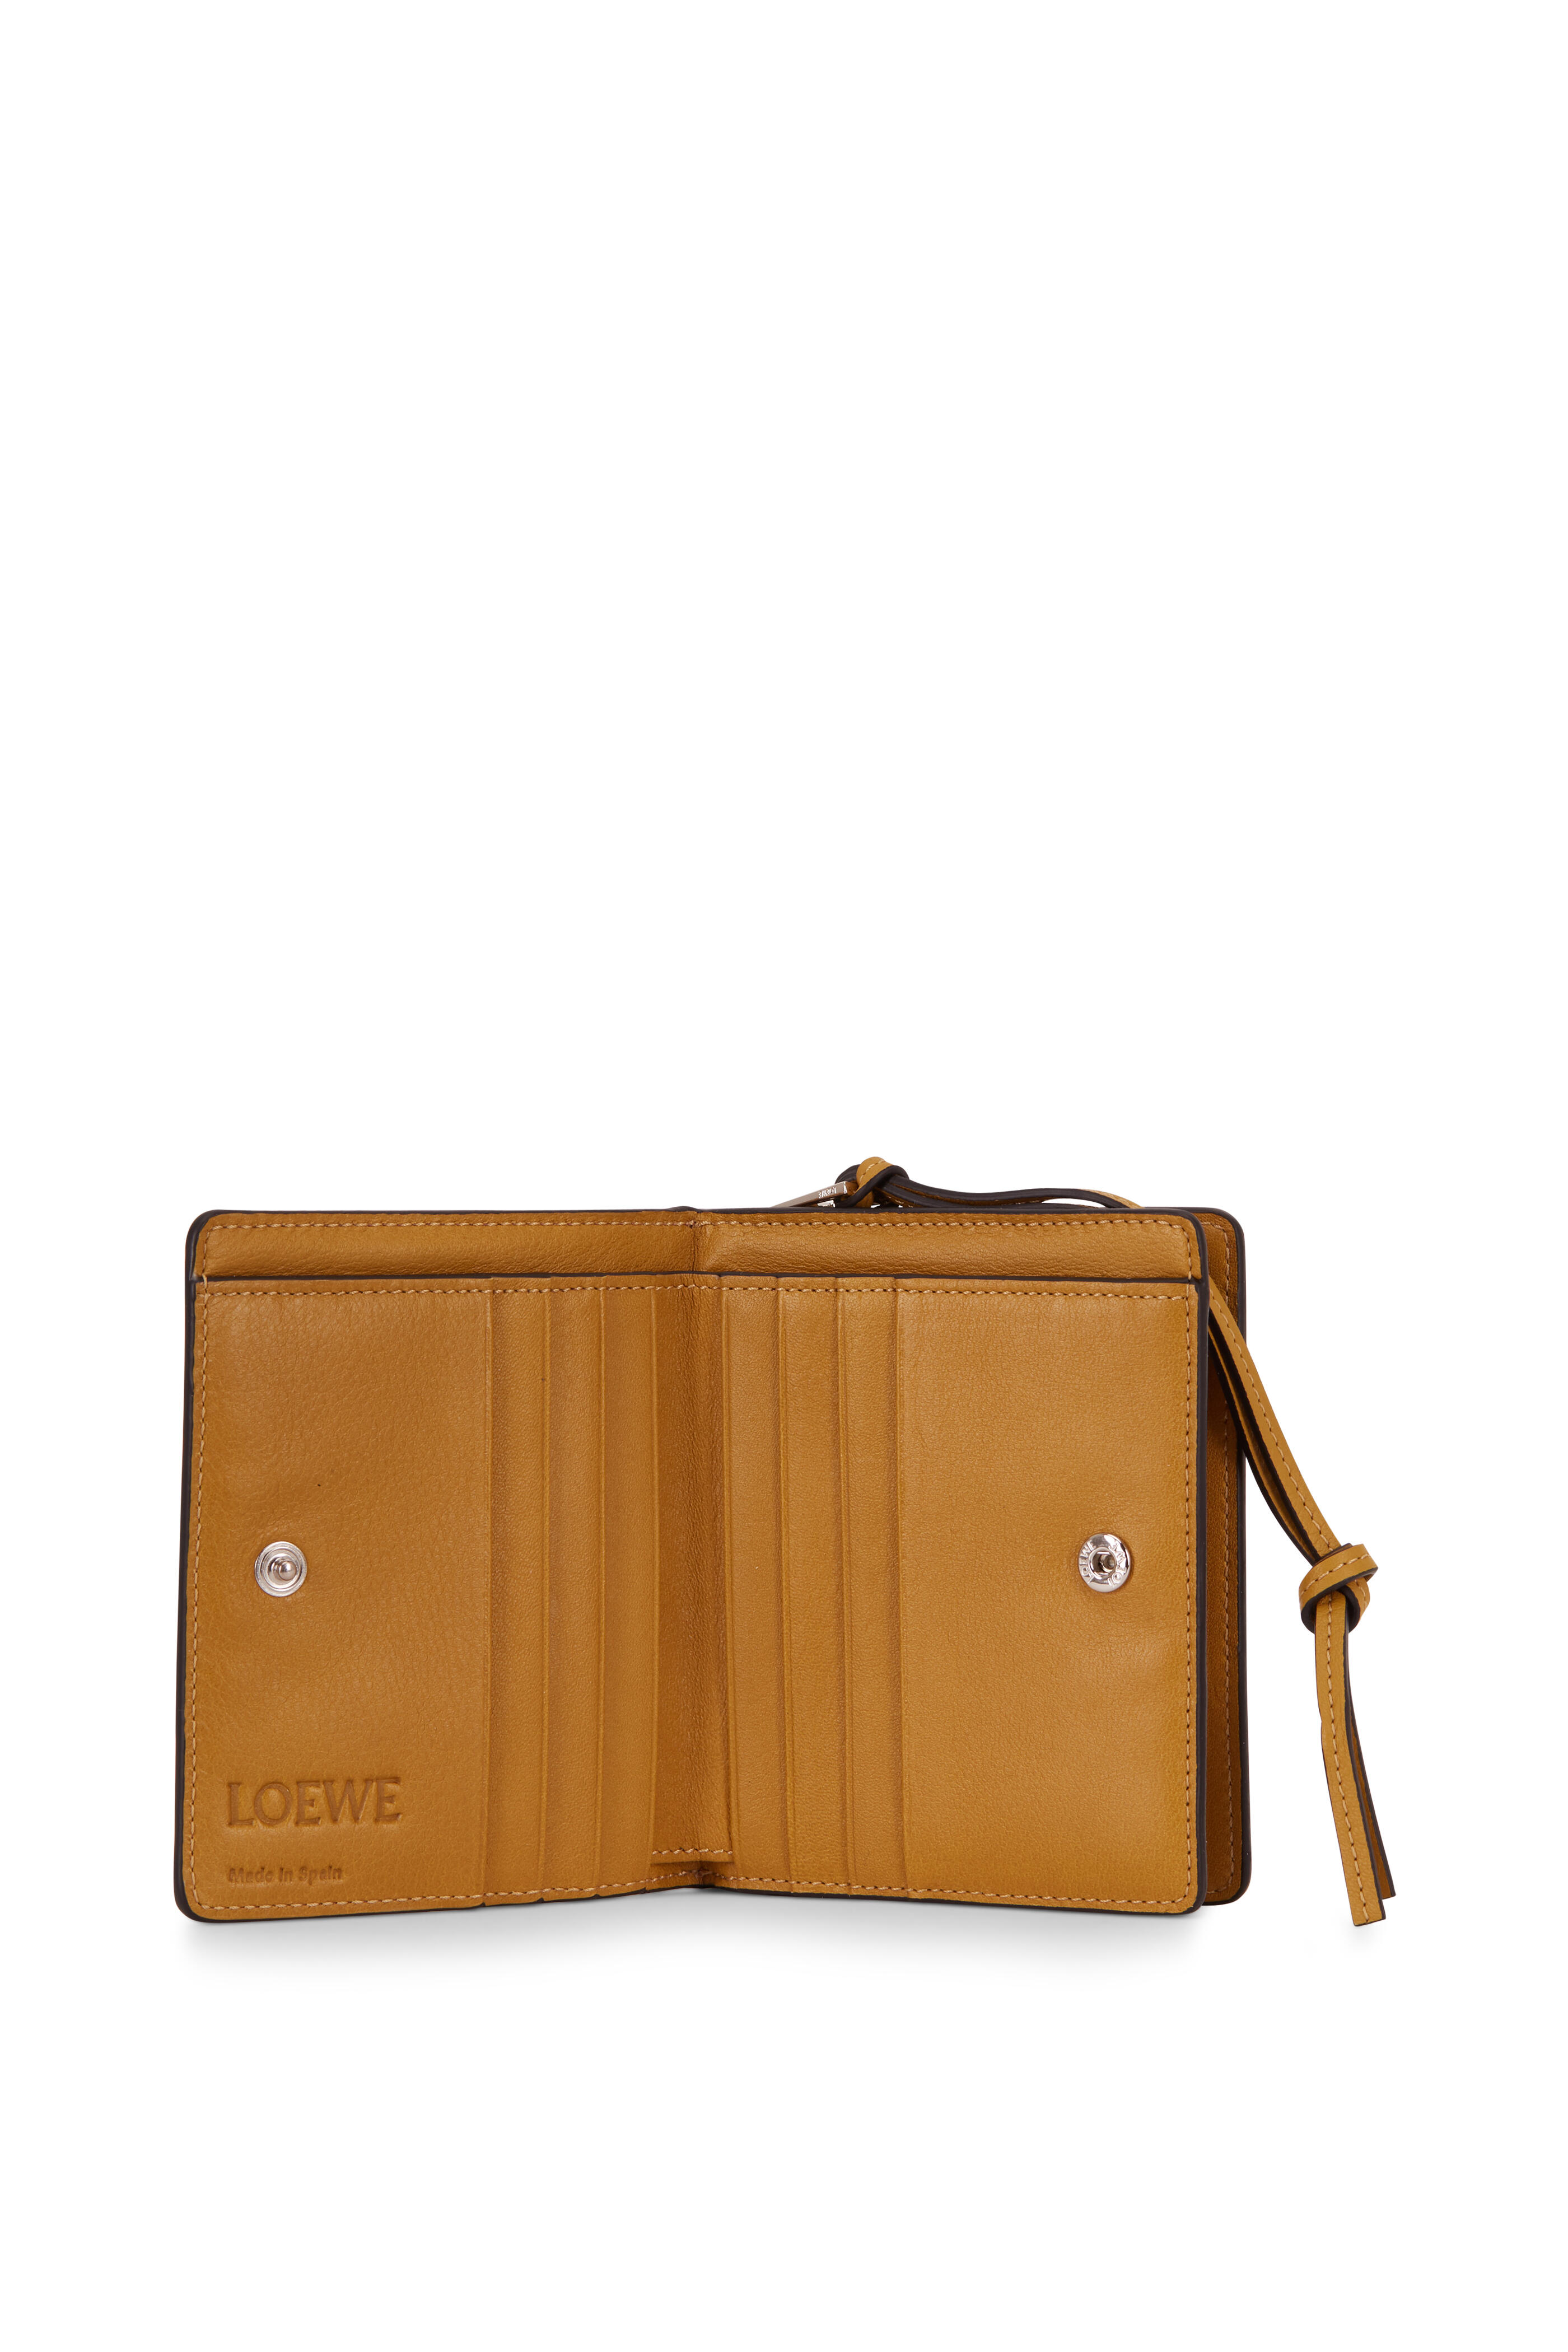 Loewe - Tan & Ochre Leather Logo Embossed Small Wallet